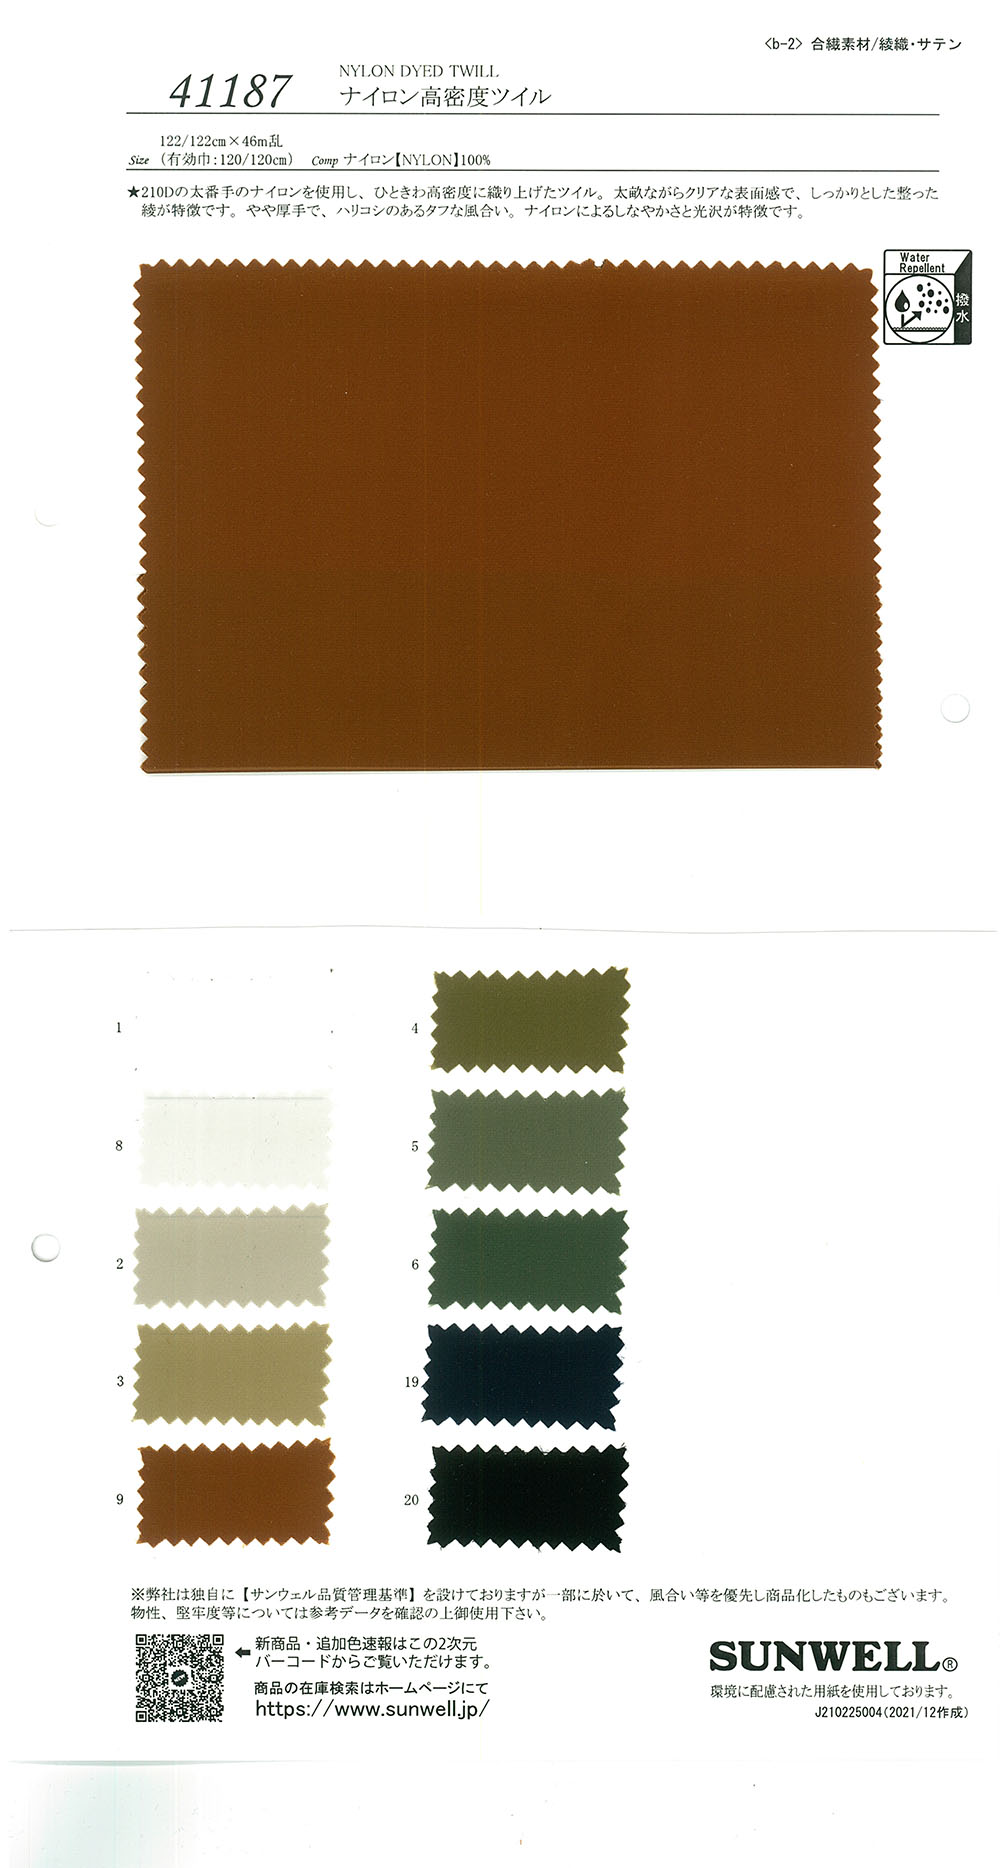 41187 Nylon High Density Twill[Textile / Fabric] SUNWELL